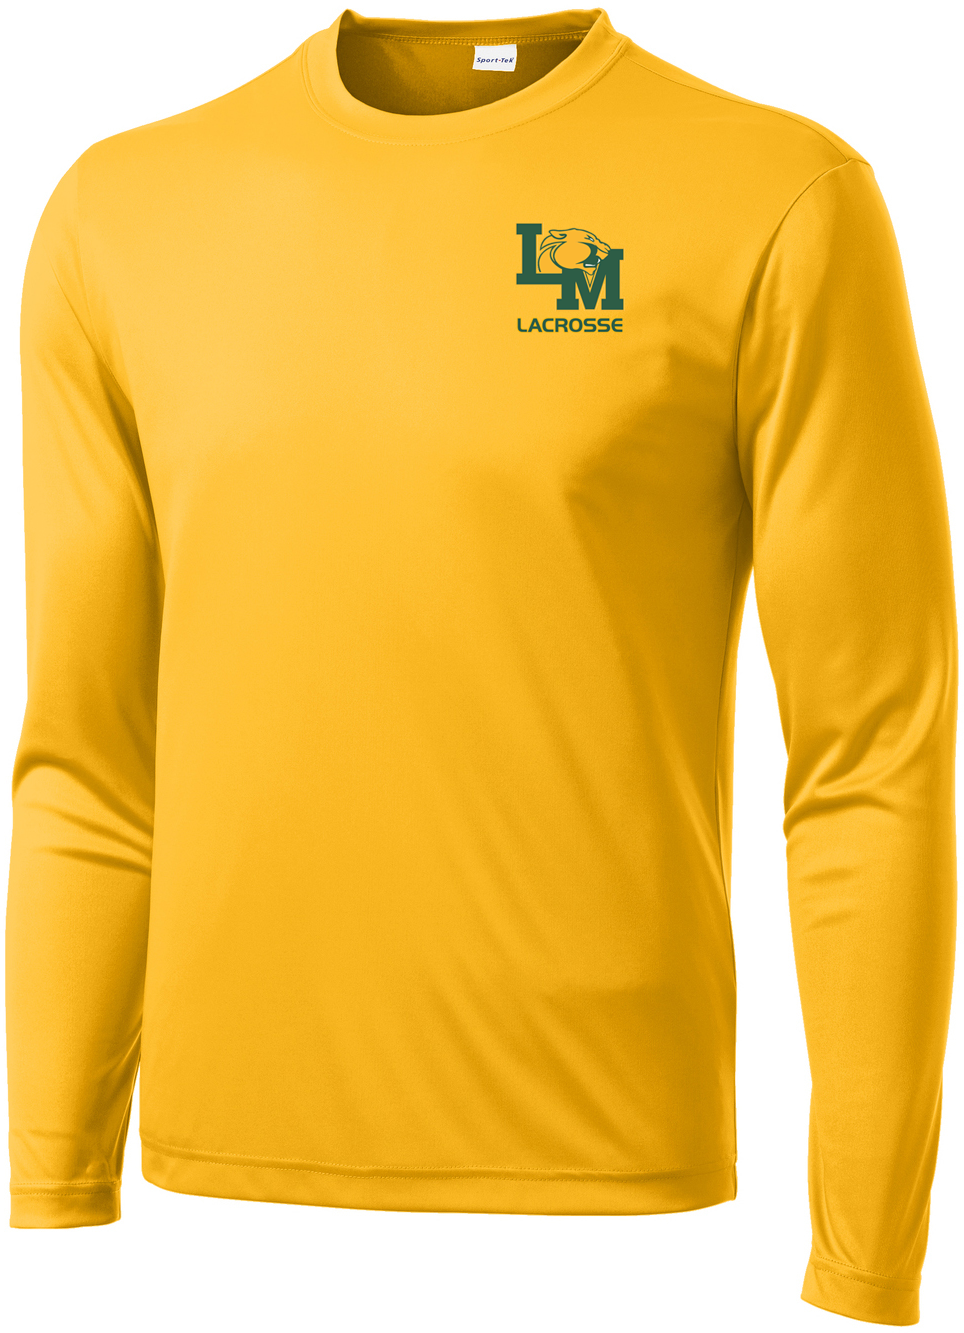 Little Miami Lacrosse Gold Long Sleeve Performance Shirt